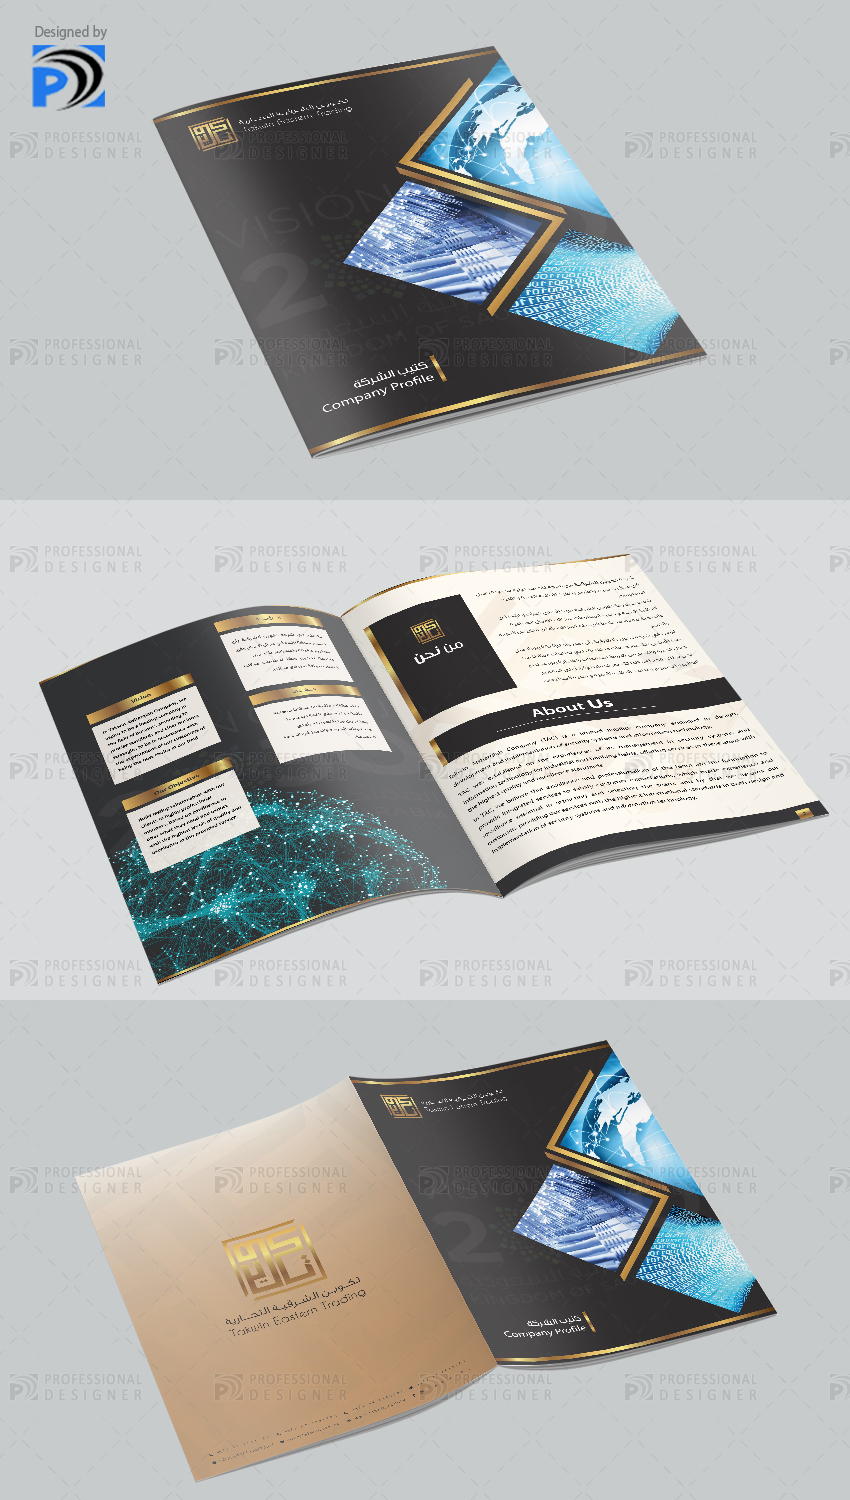 handbook design for takwin AL shrqya comapnies